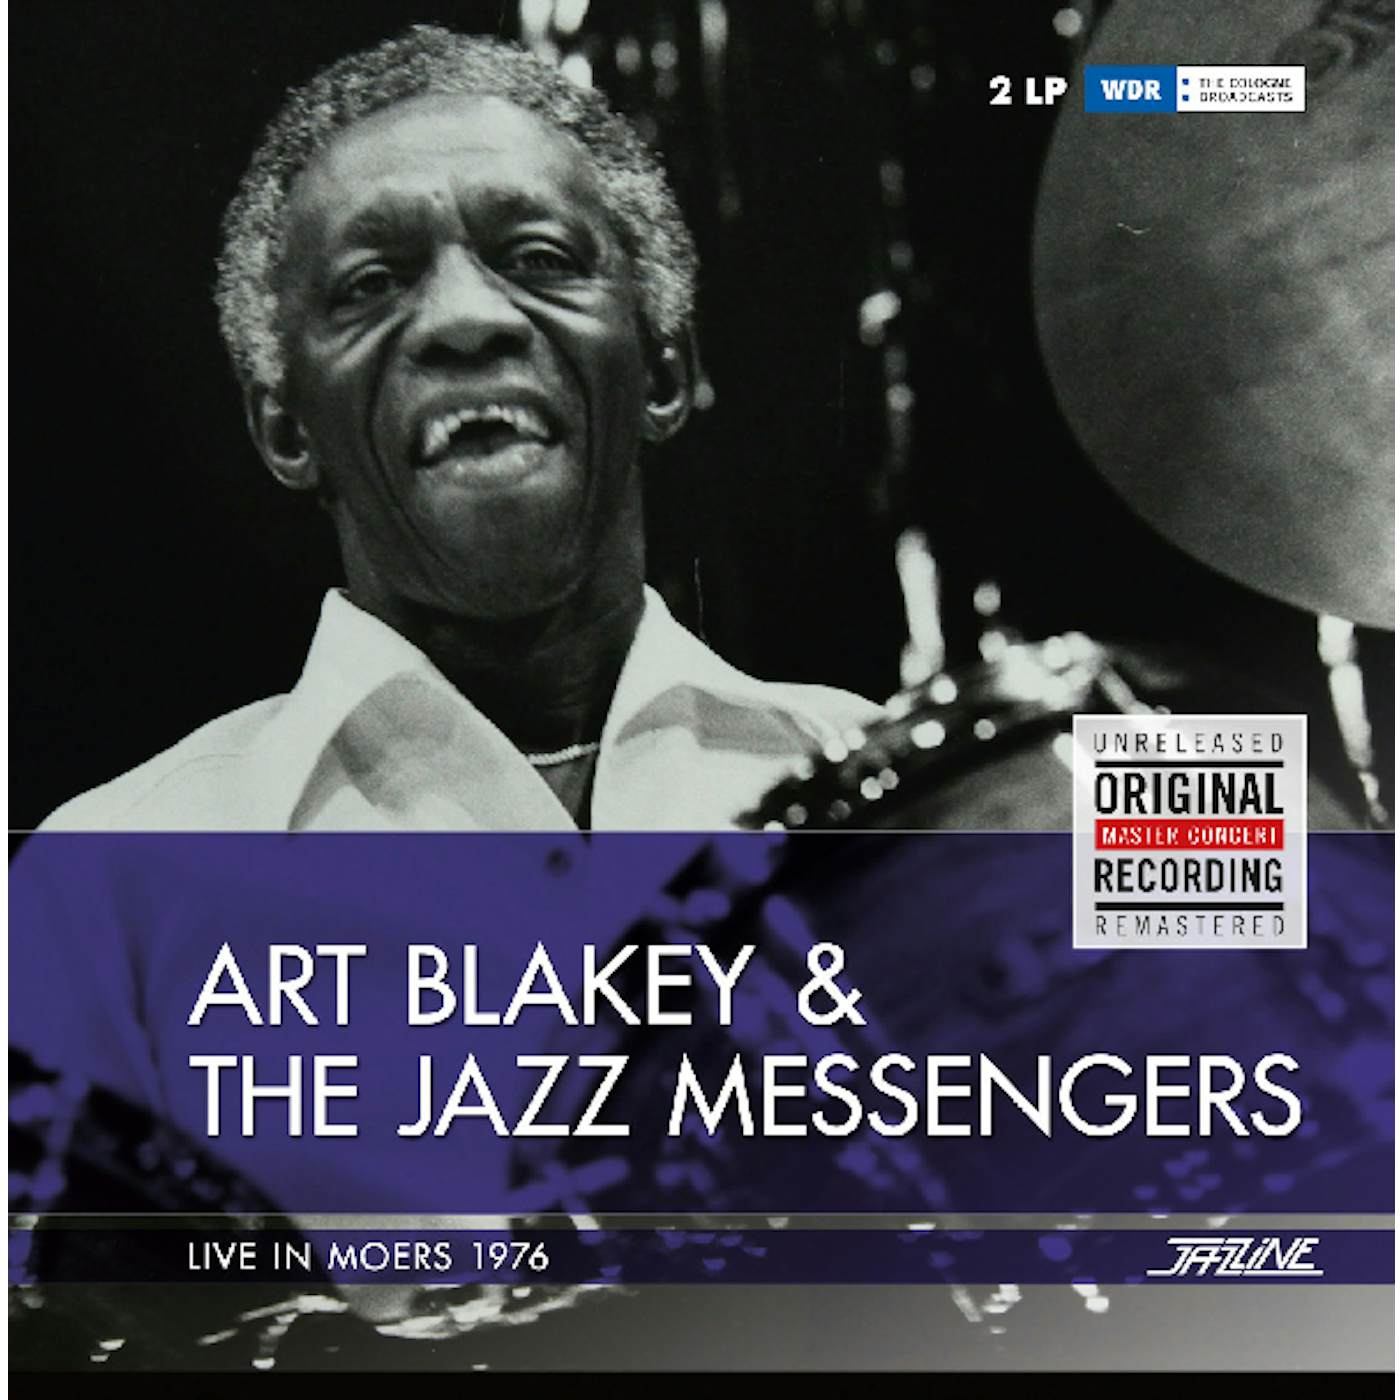 Art Blakey & The Jazz Messengers Live In Moers 1976 Vinyl Record